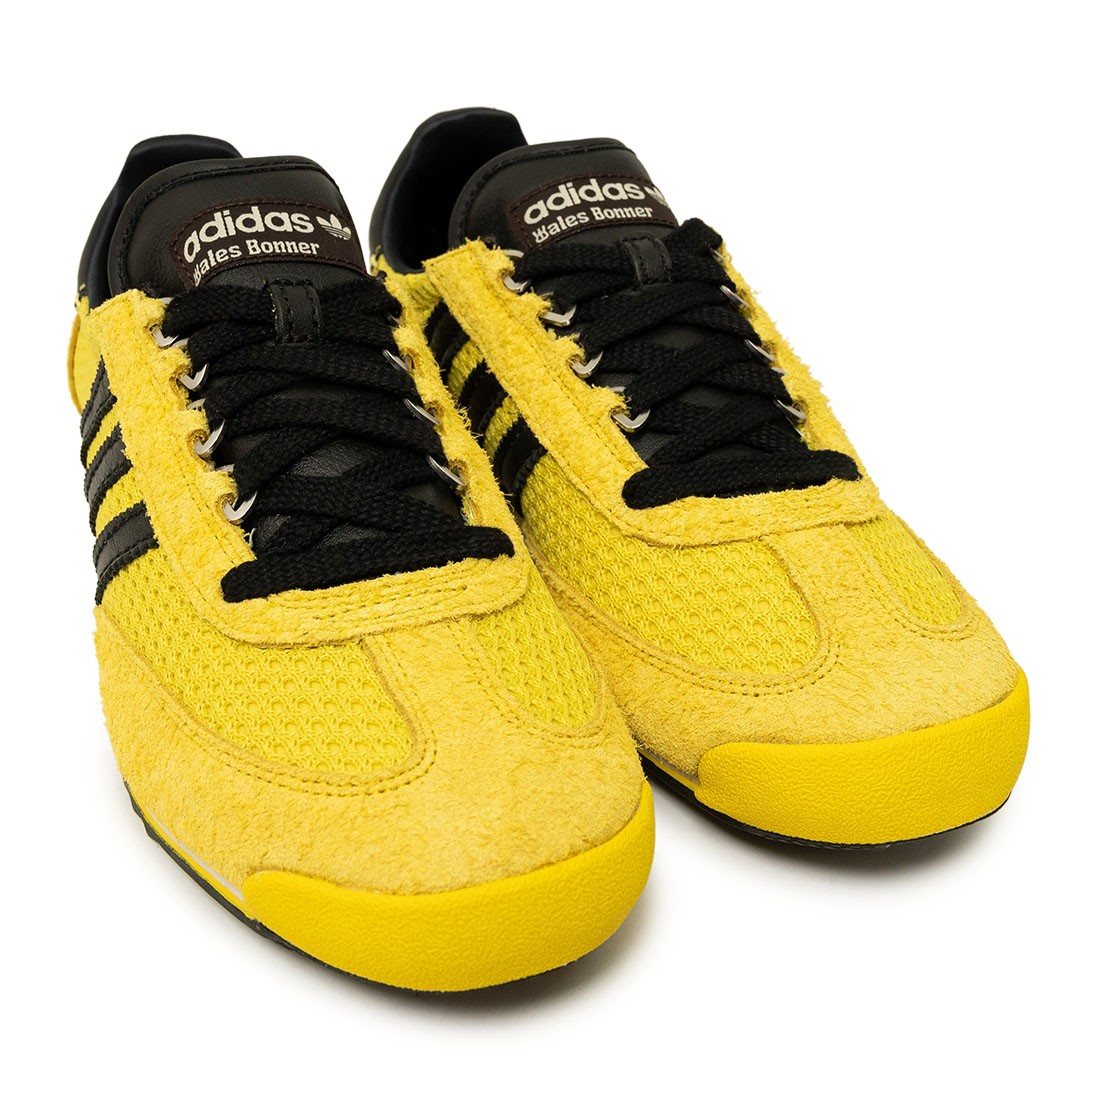 Adidas x Wales Bonner Men SL76 yellow bold orange core black